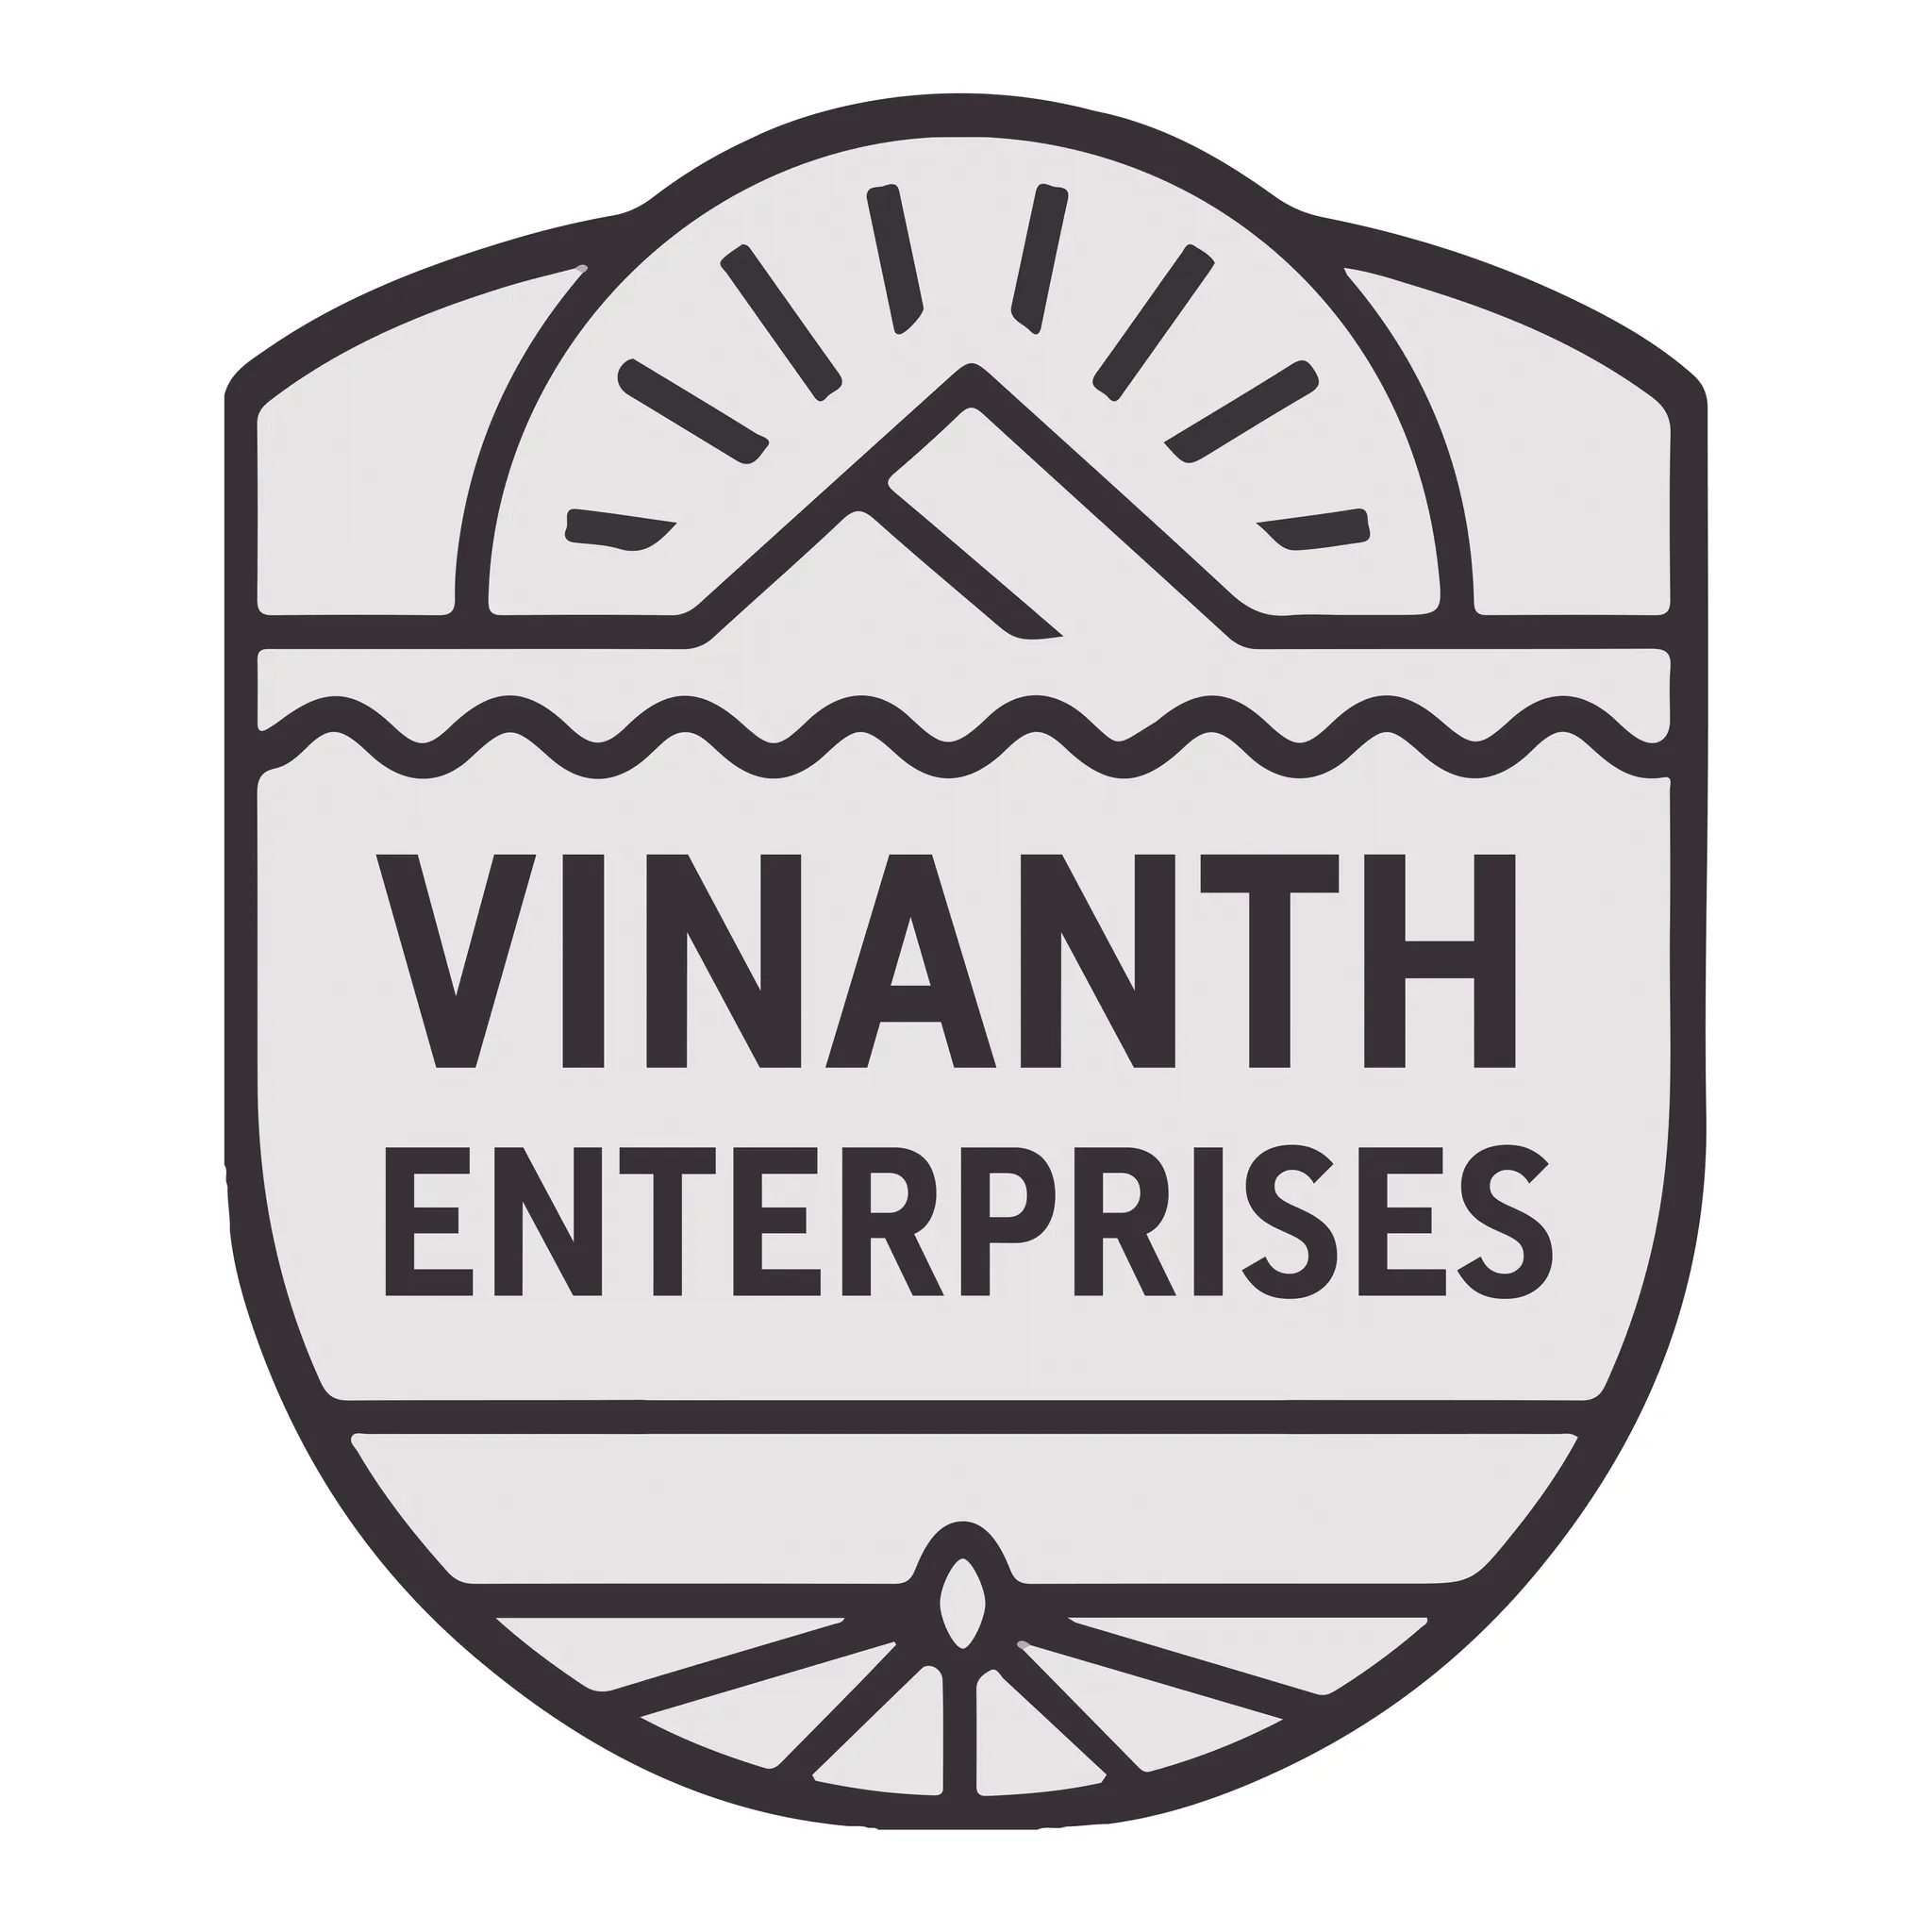 Vinanth Enterprises